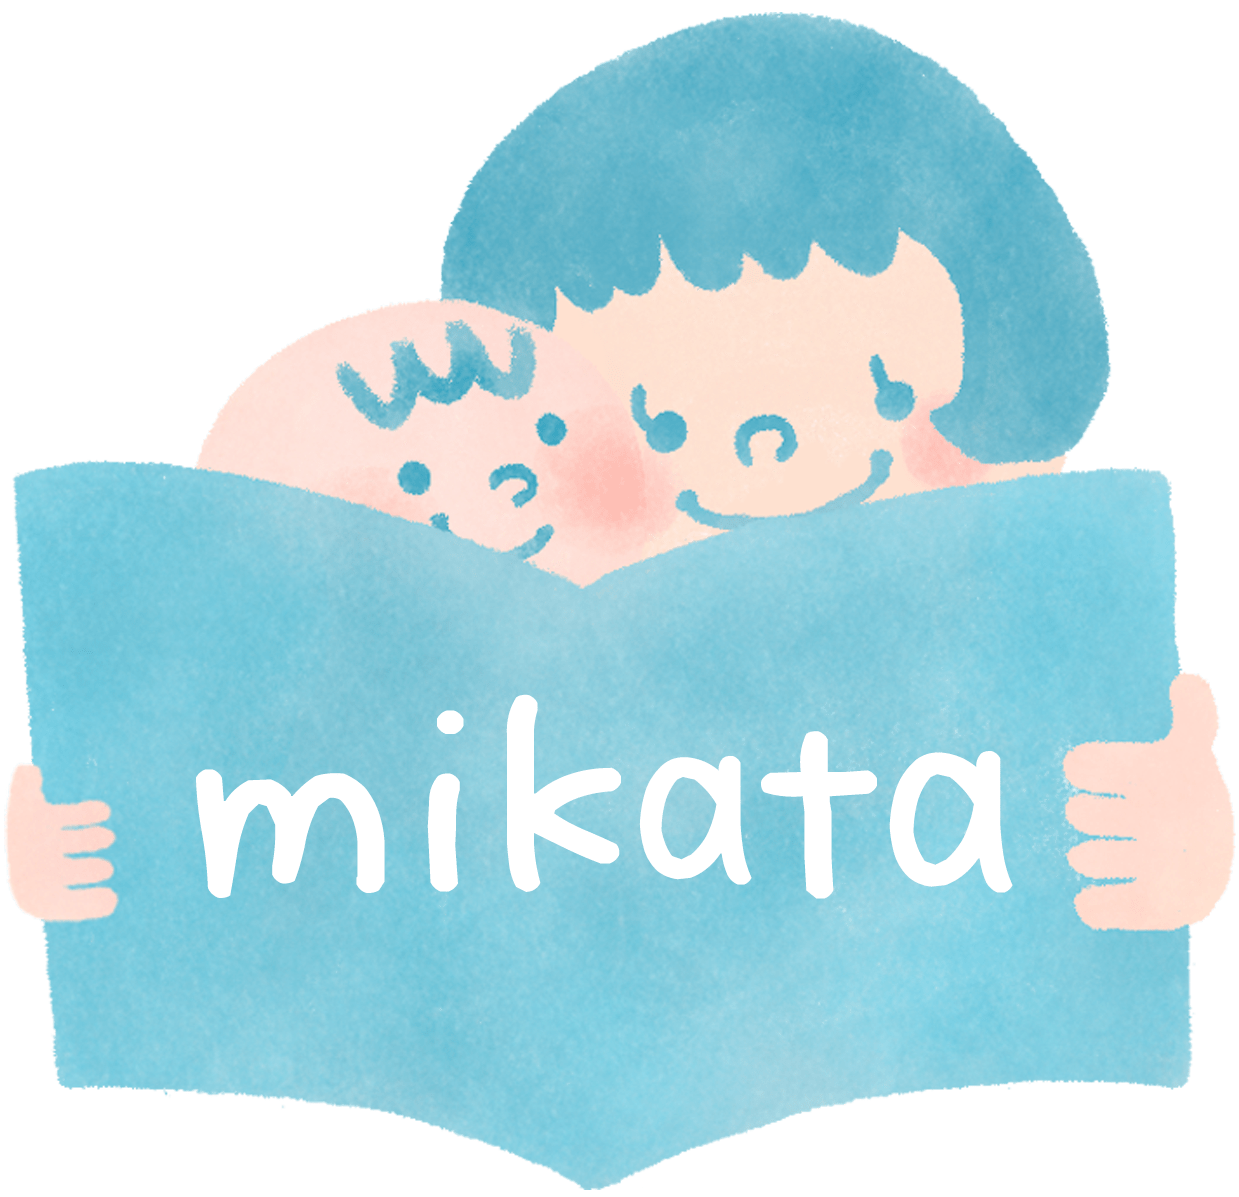 mikata 見方を変えれば子育ては面白い 子育てに向かうママの味方です